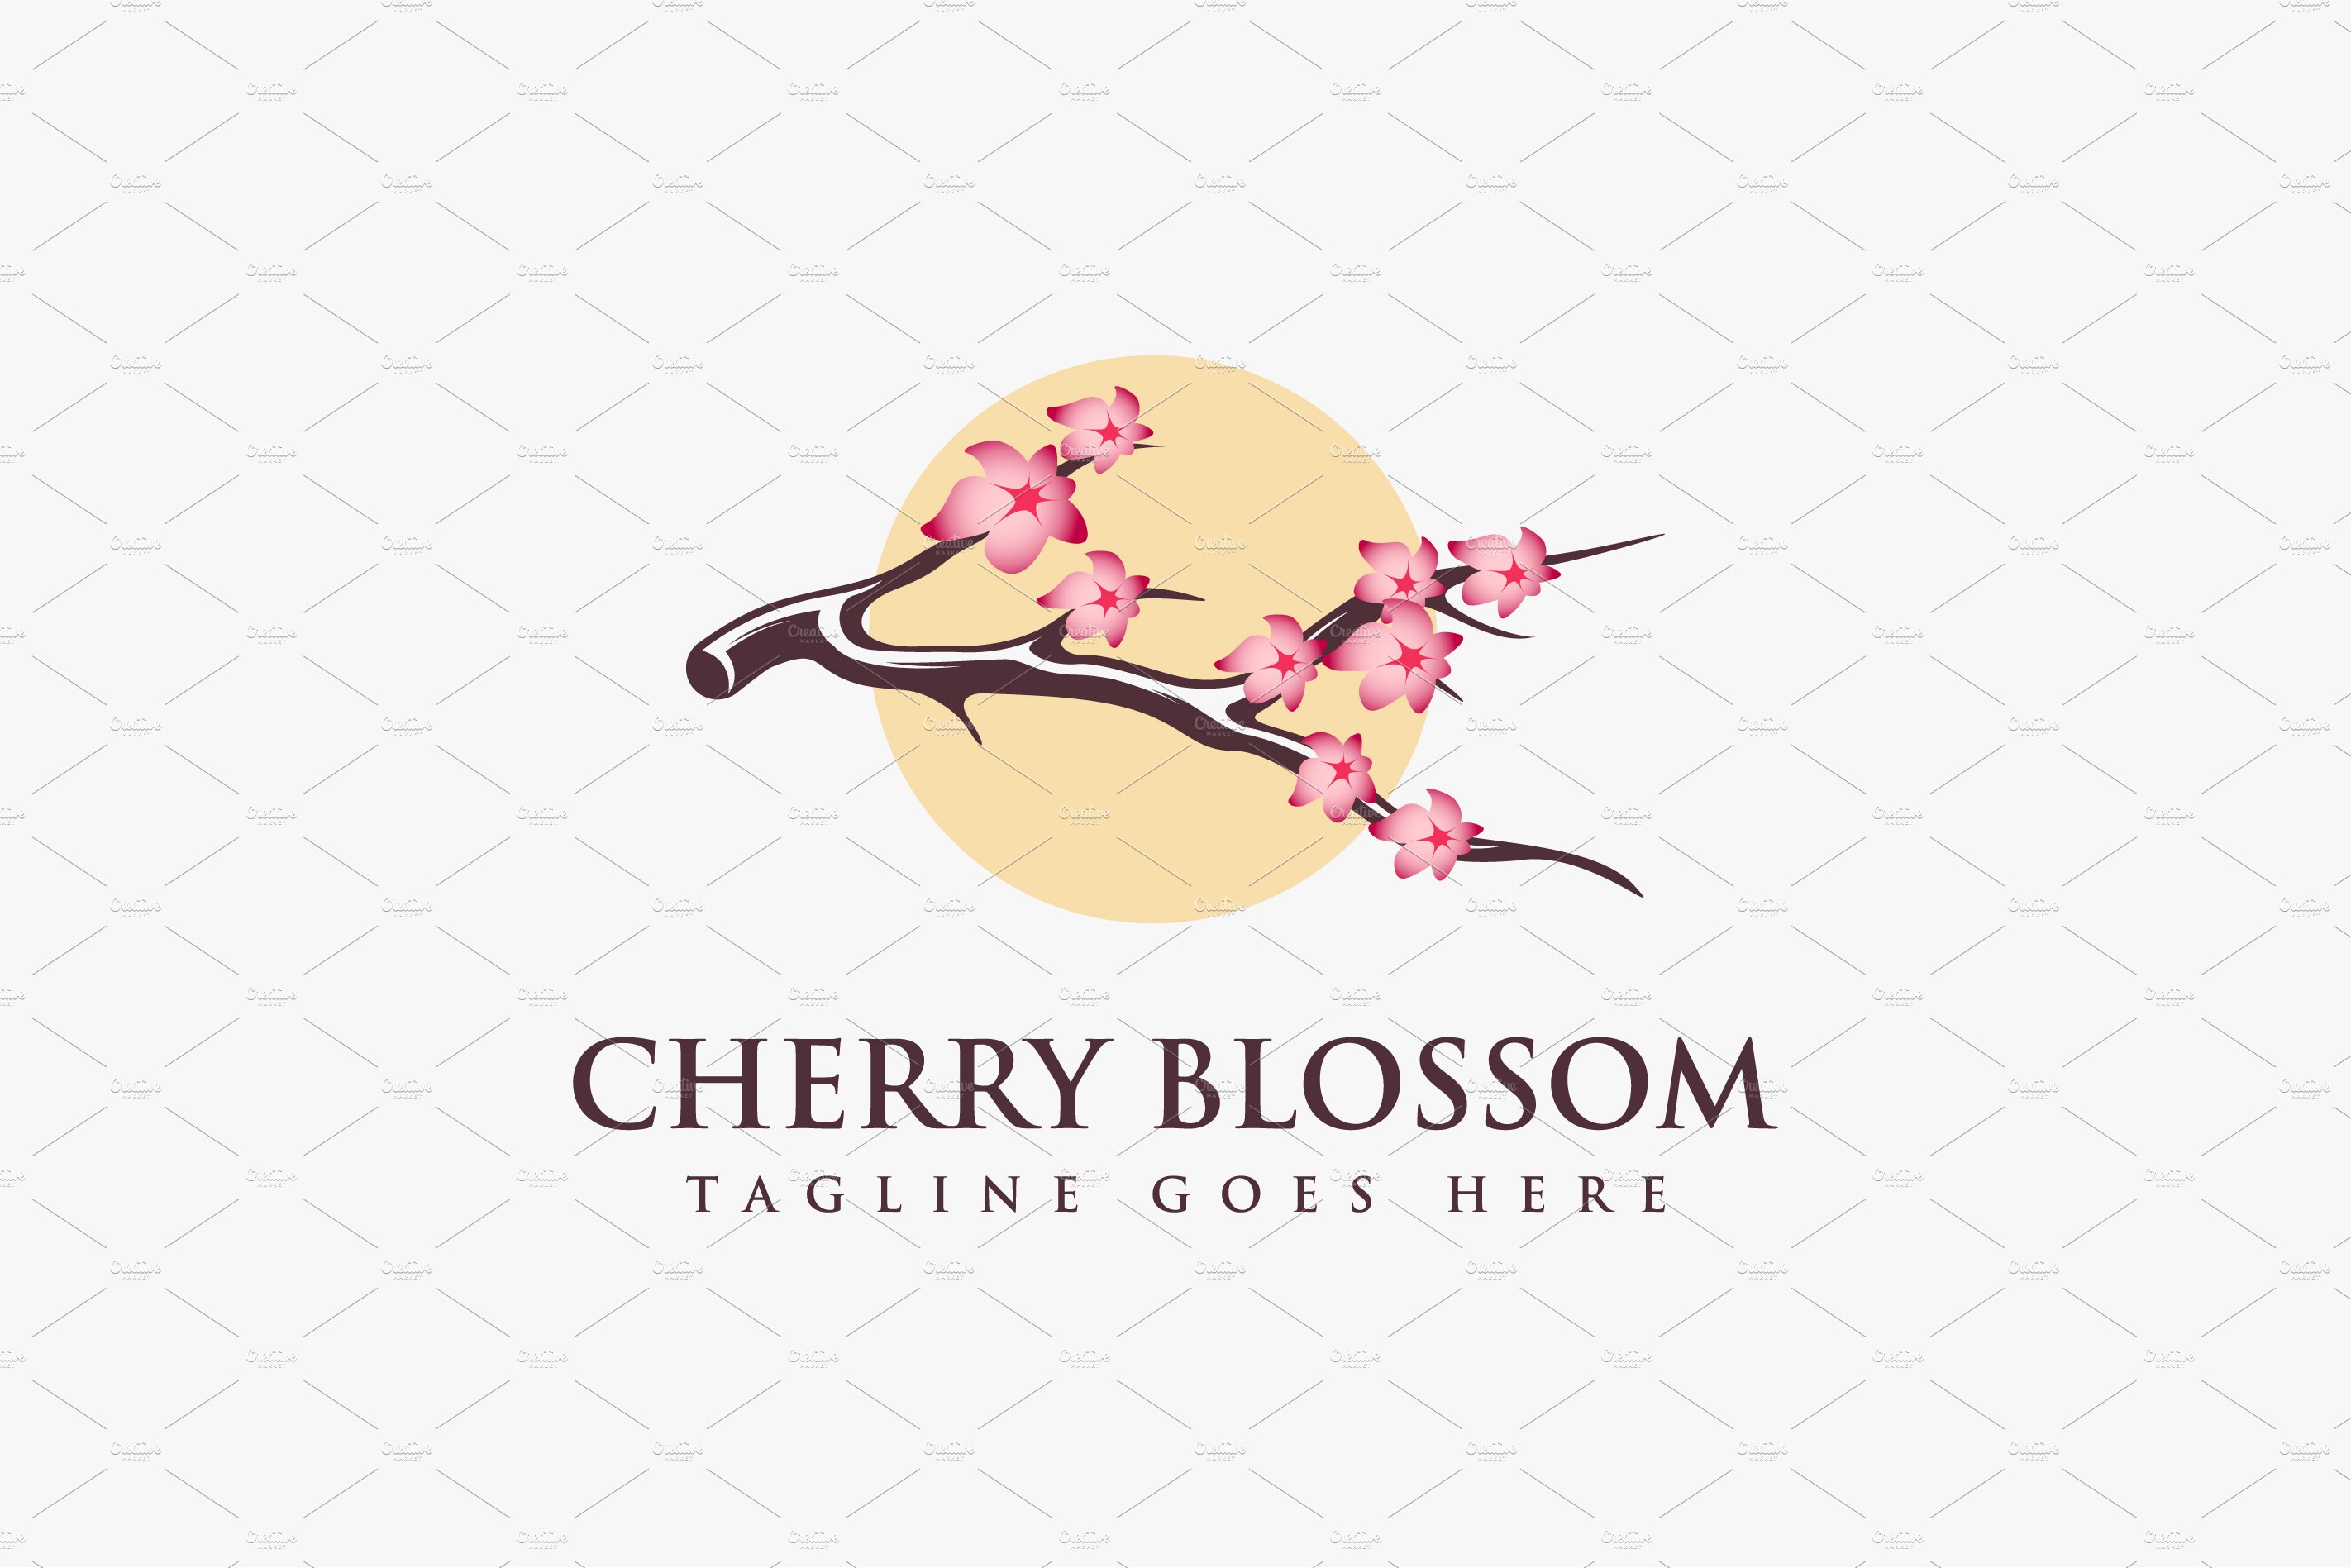 Cherry Blossom branch tree logo cover image.